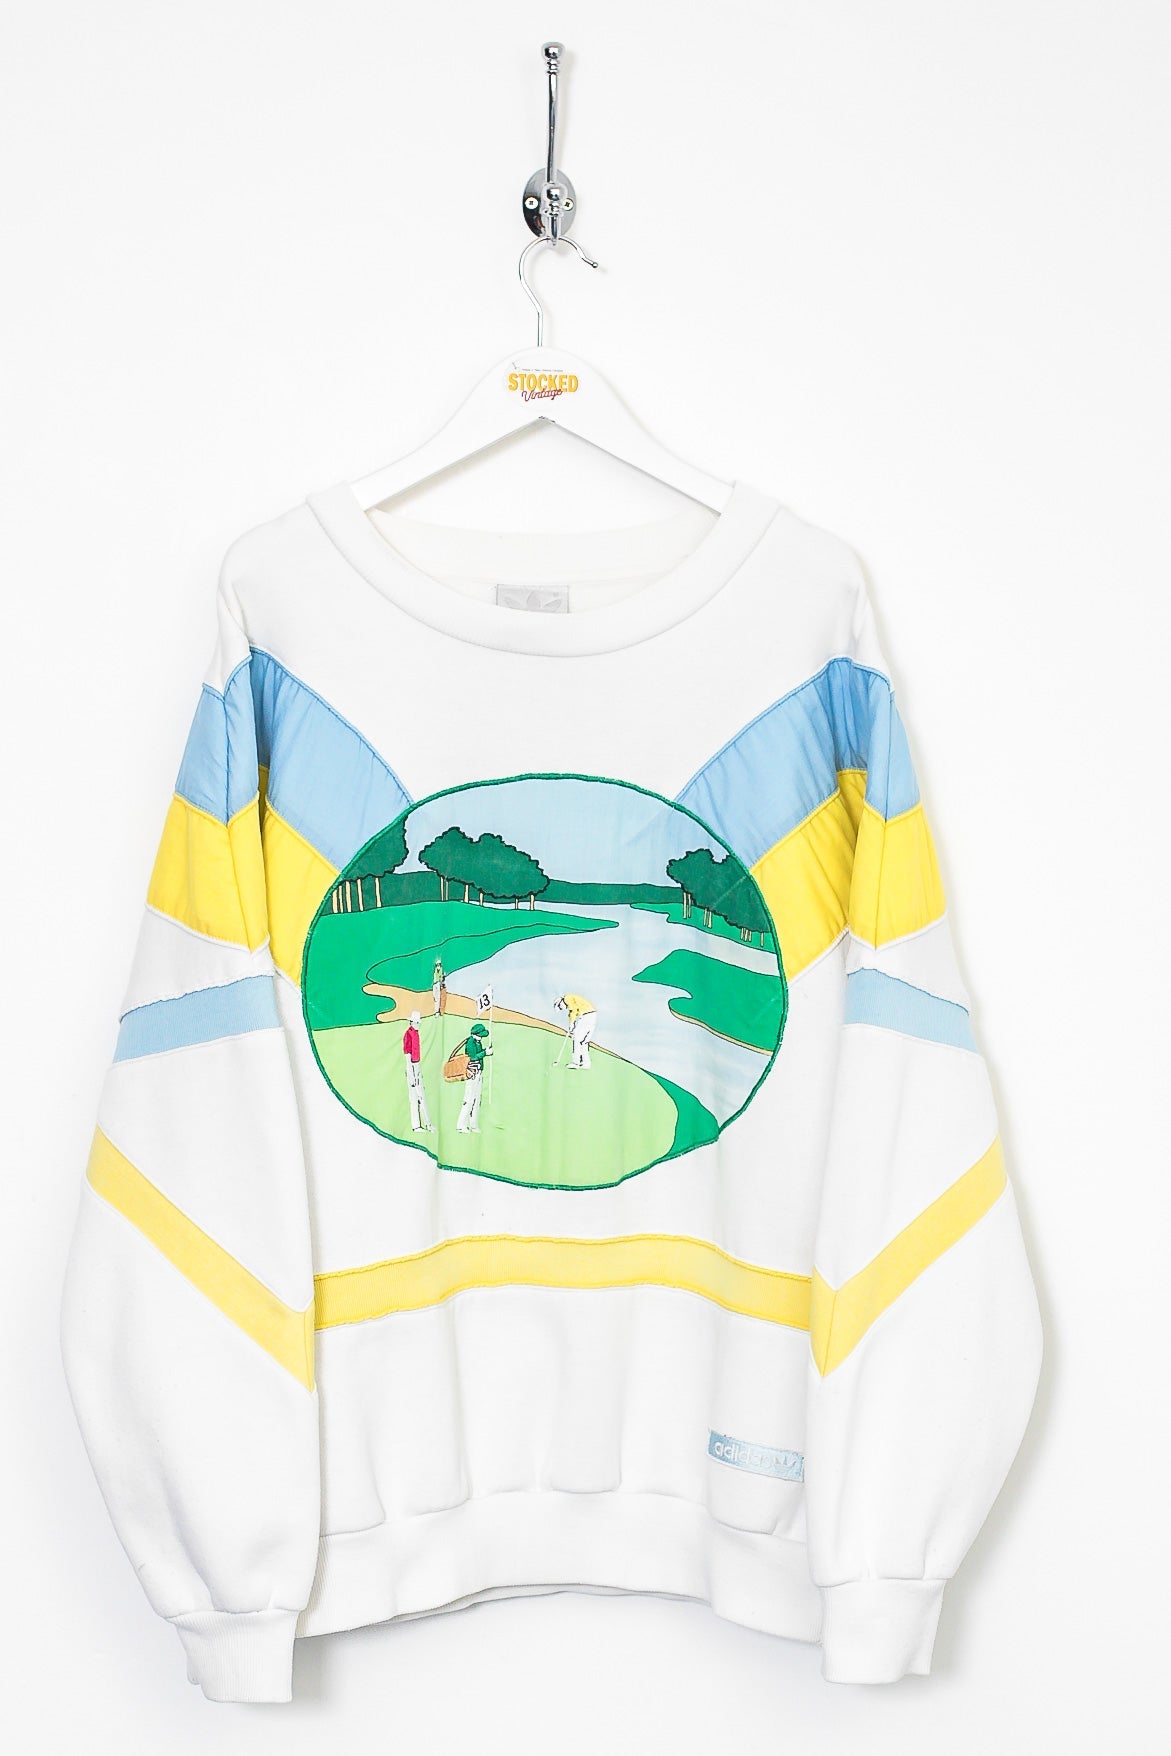 Rare 80s Adidas "The Hills" Golf Sweatshirt (M)